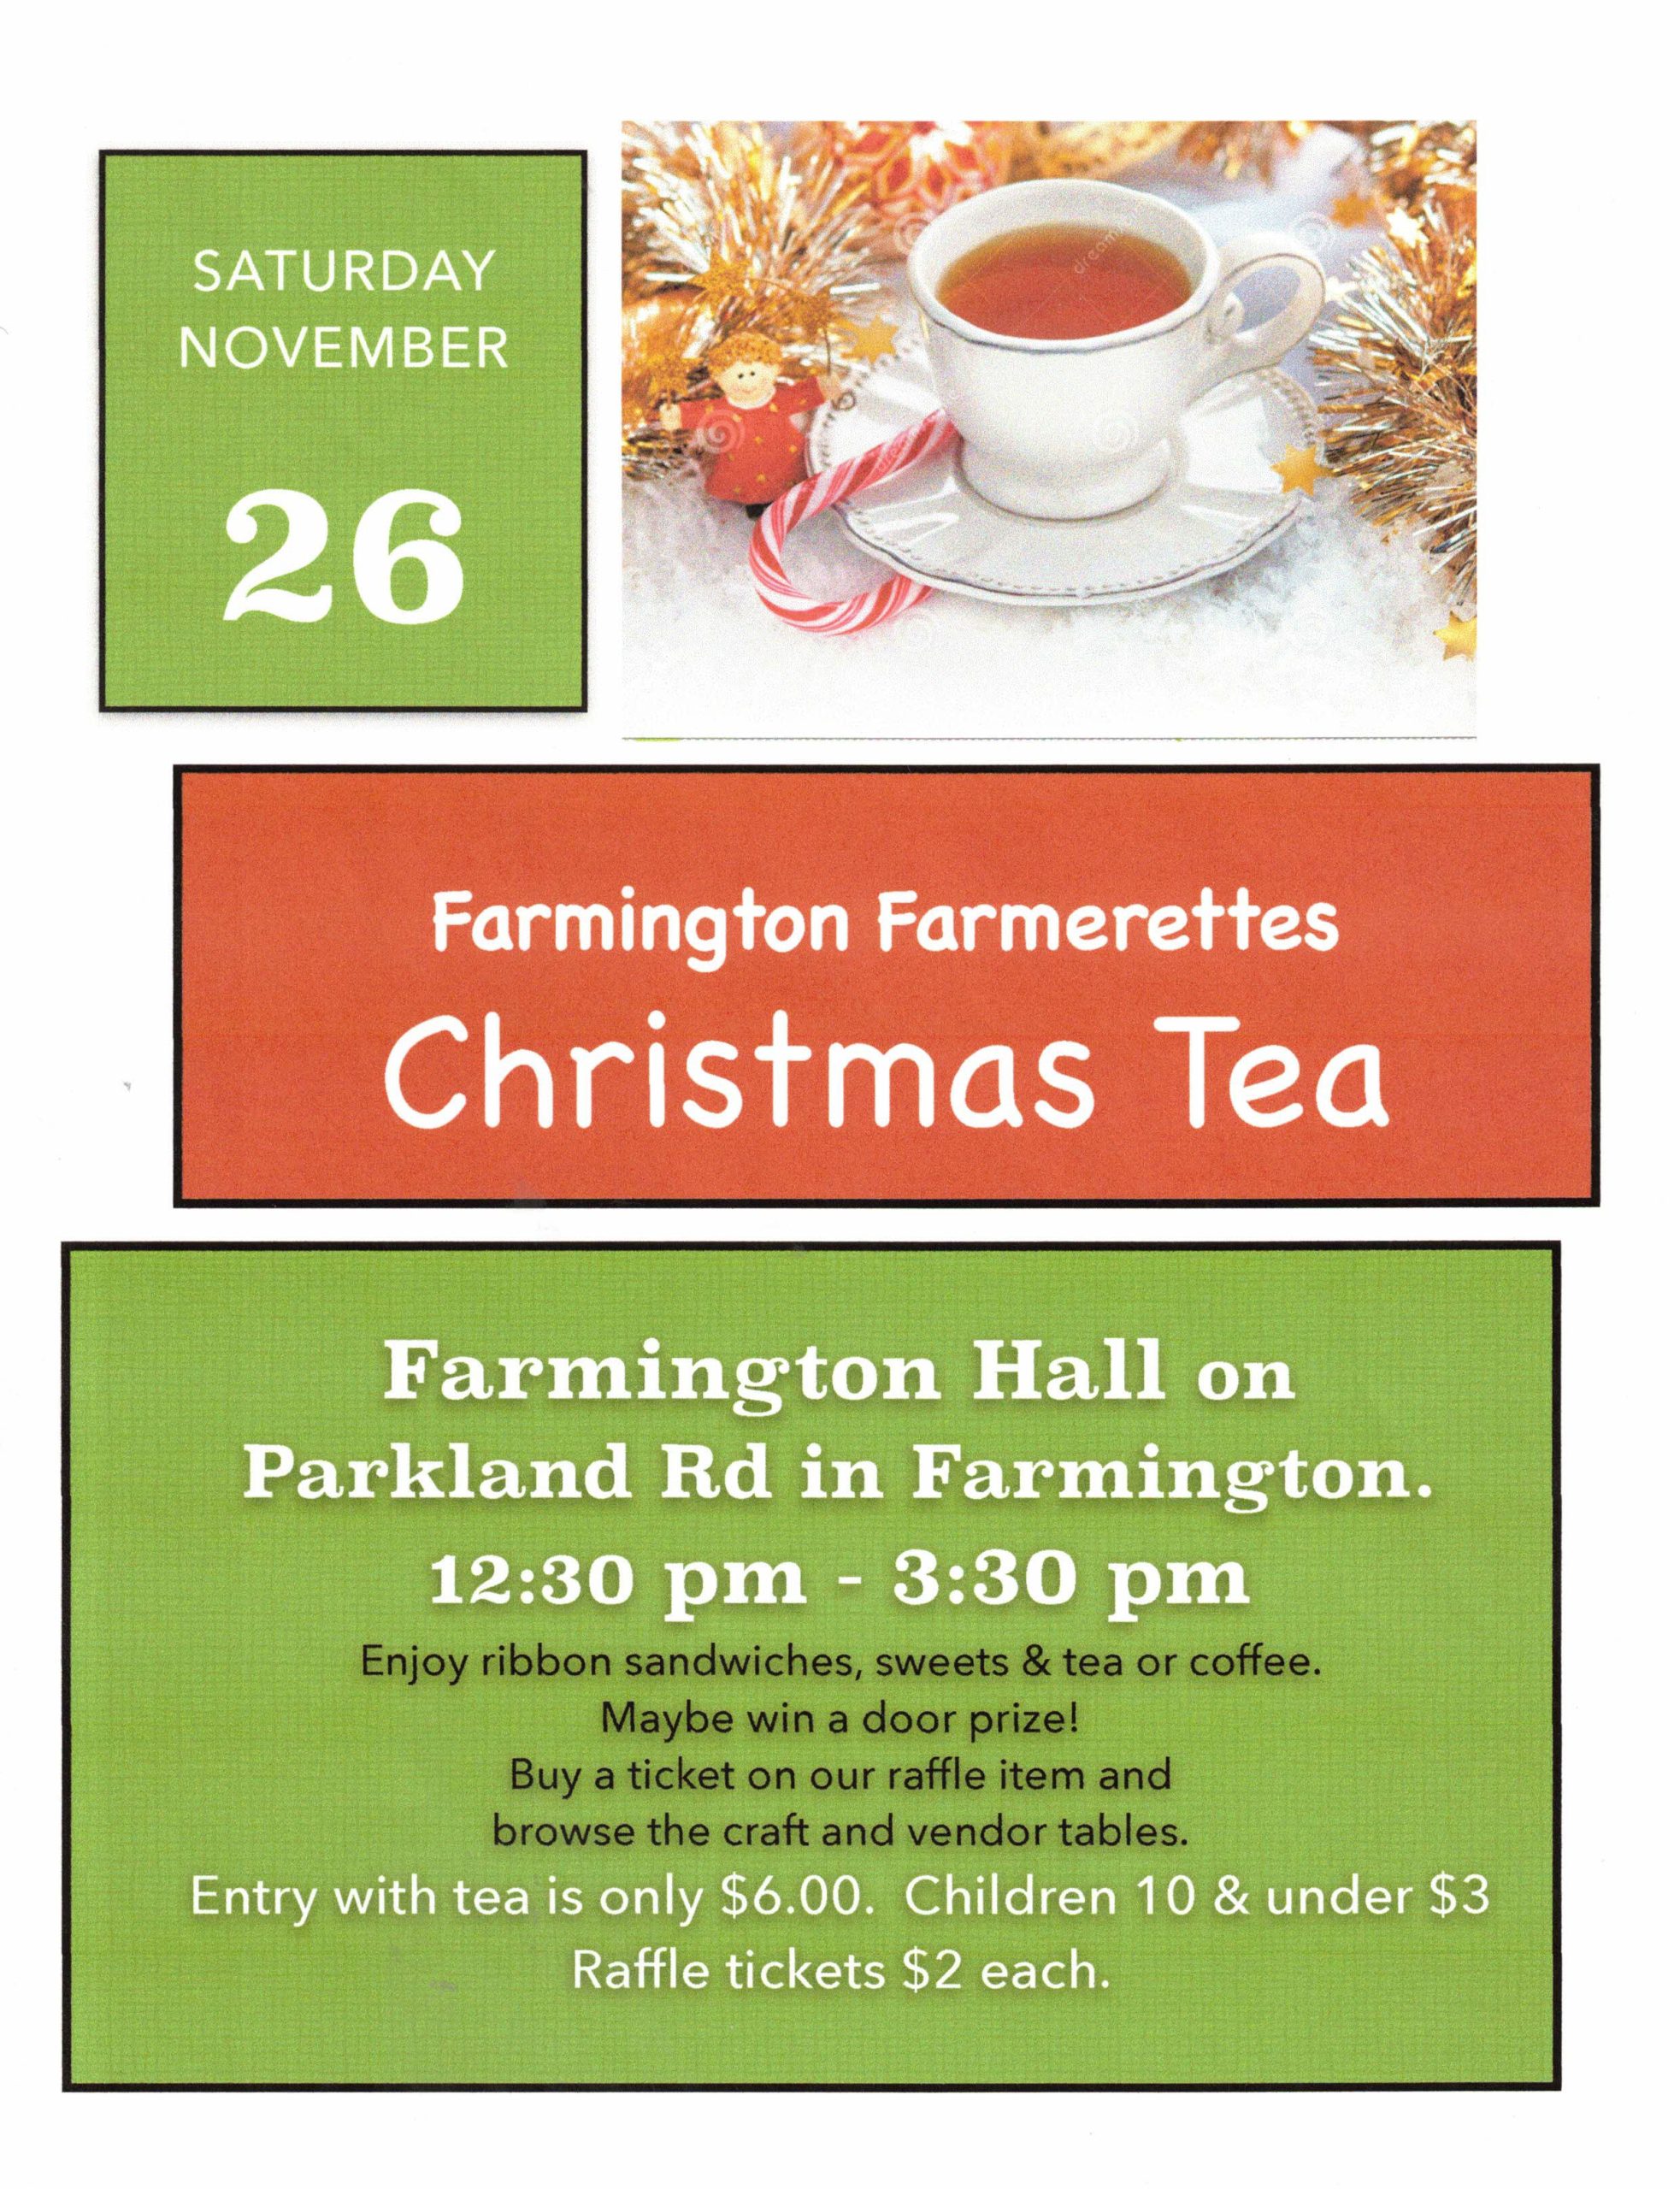 FARMINGTON FARMERETTES CHRISTMAS TEA & CRAFT SALE